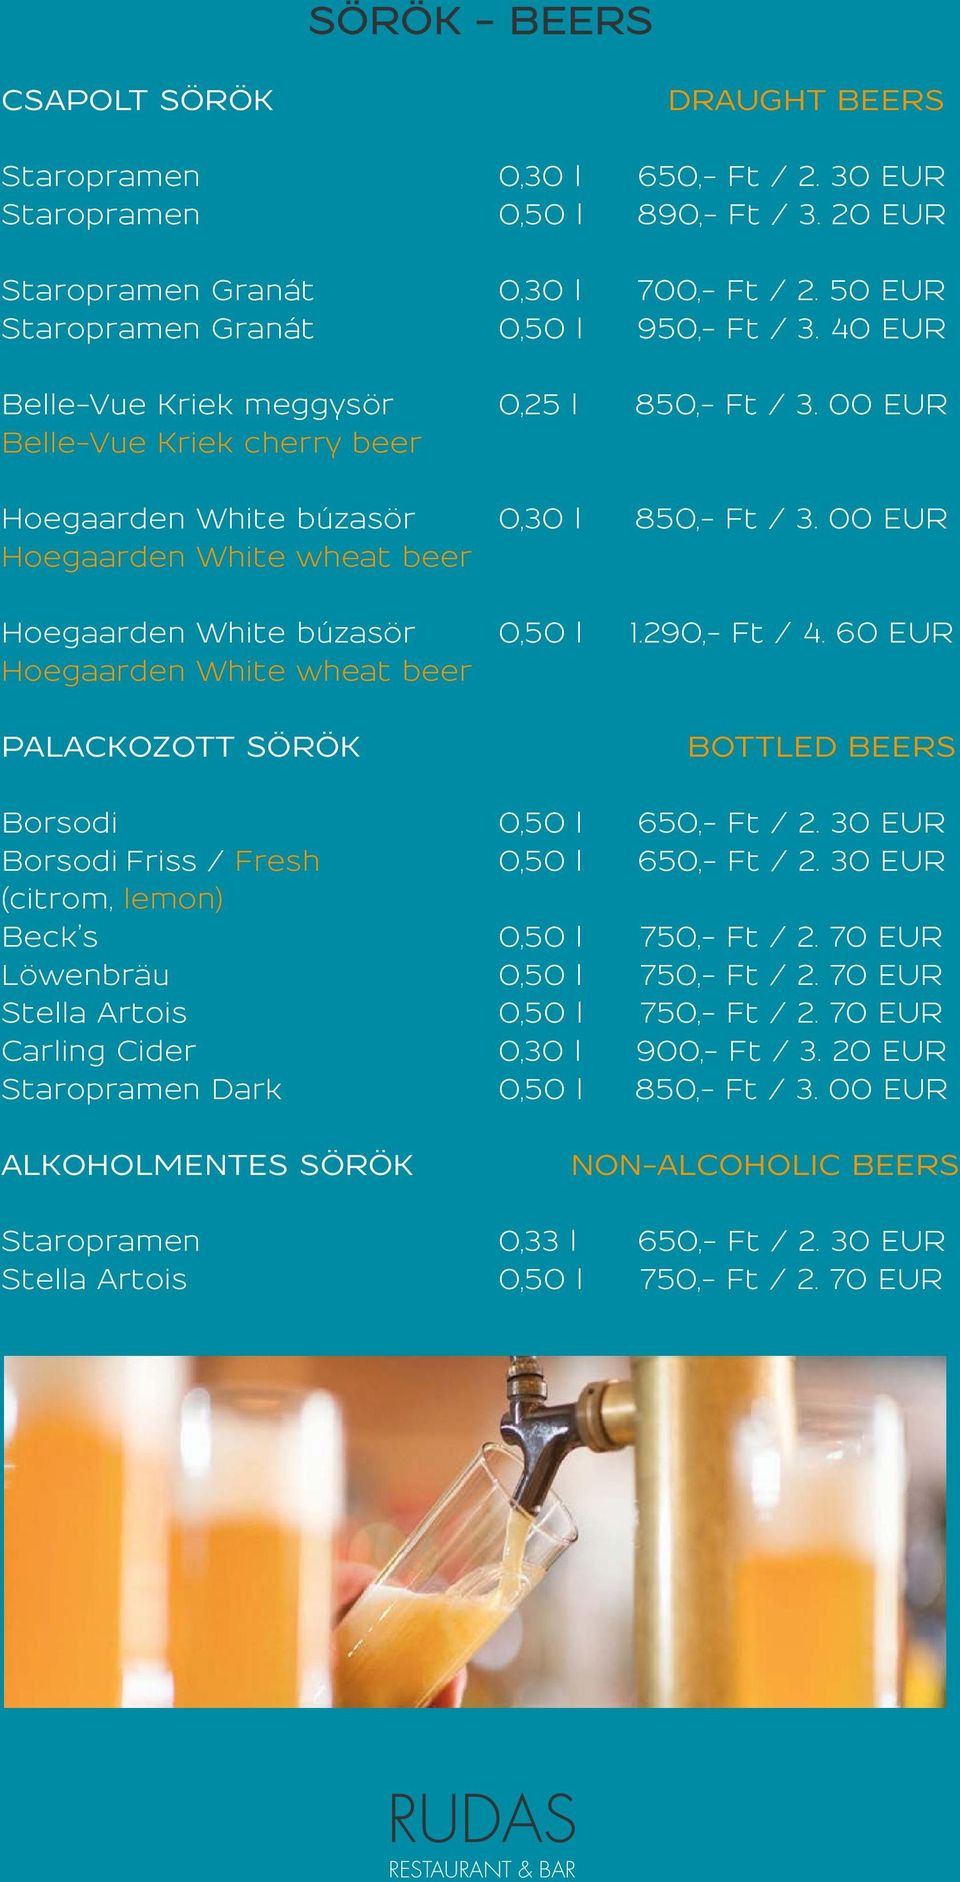 00 EUR Hoegaarden White wheat beer Hoegaarden White búzasör 0,50 l 1.290,- Ft / 4.